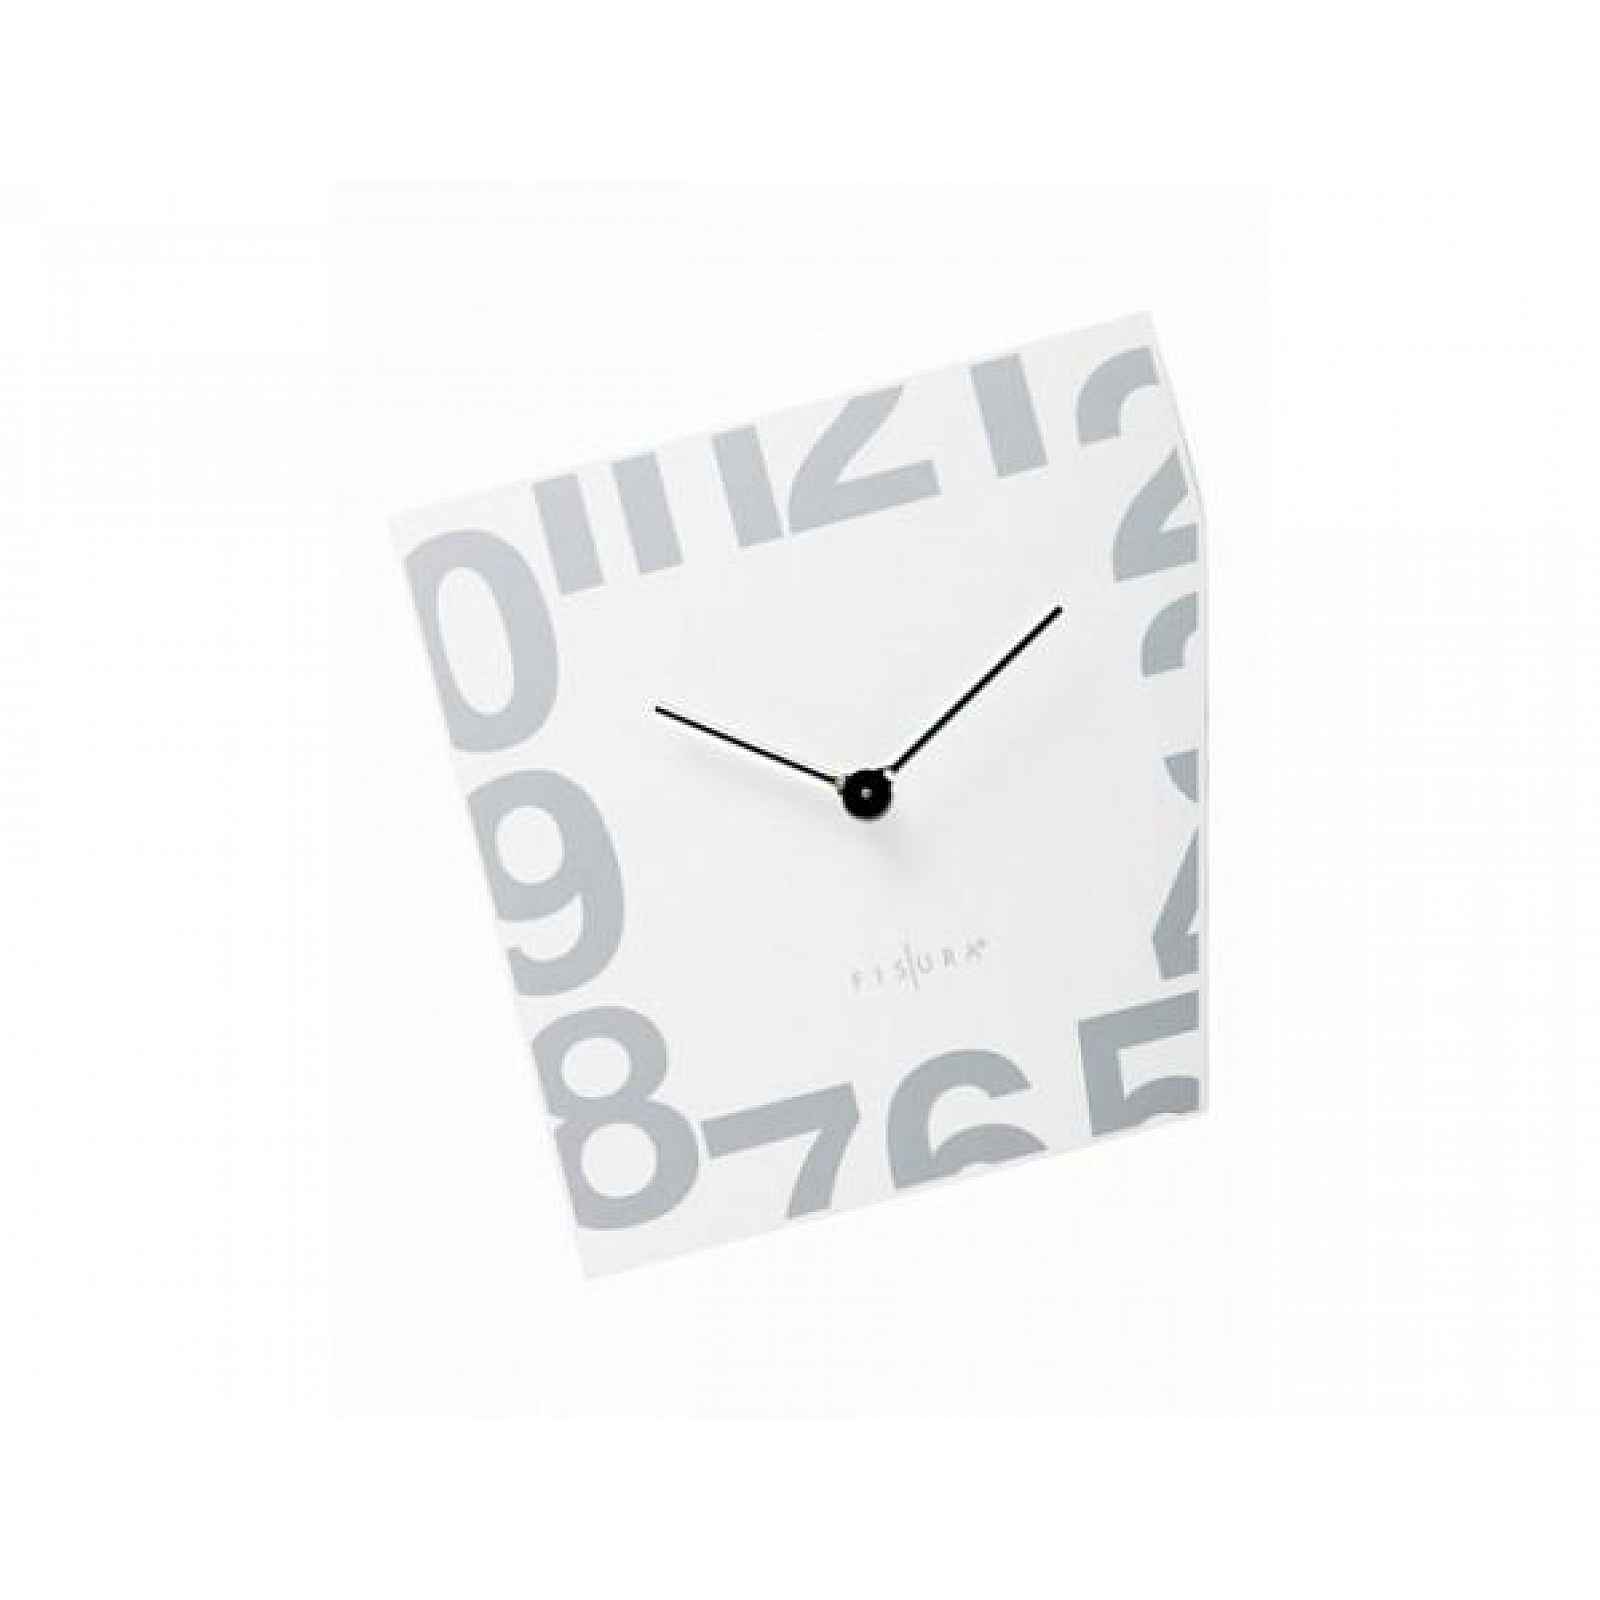 Fisura nástěnné hodiny Esquina White 21cm